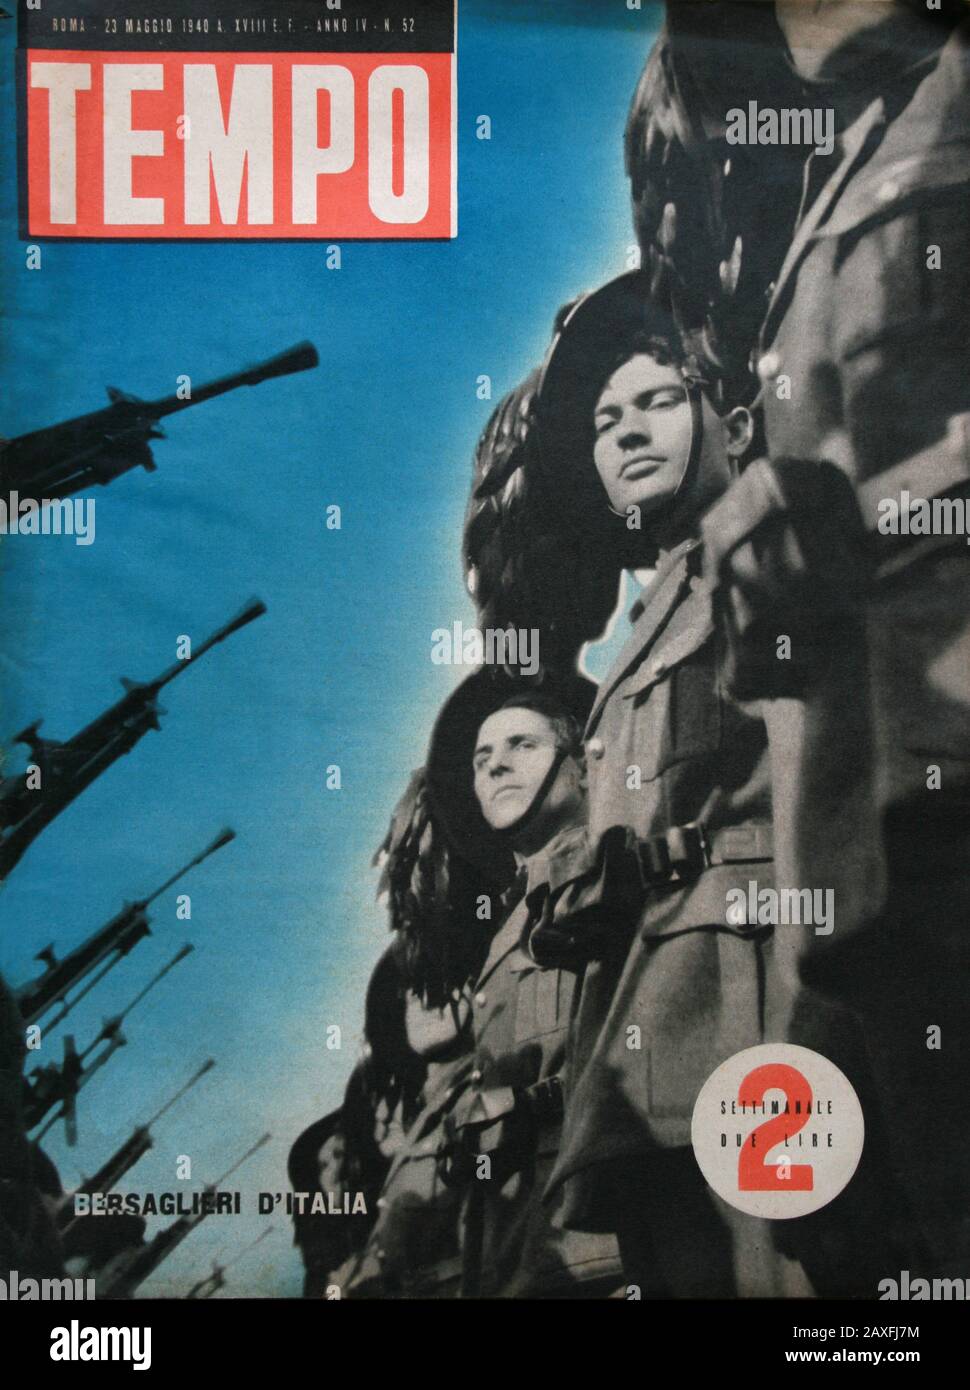 1940 , ITALIEN : Die italienische Illustrierte Zeitschrift Tempo mit BERSAGLIERI auf dem Cover 23. Mai 1940 - Ritratto - Porträt - POLITICA - POLITICO - ITALIA - POLITICAL - Portrait - ITALIEN - FASCISMO - FASCHISMUS - FASCISTA - FASCHIST - PROPAGANDA - ITALIA - ANNI QUARANTA - 40 - 40 - copertina - rivista illata - KUNST - ARTE - Militäruniform - divisa militare uniforme - WW 2. - 2. Weltkrieg - SECONDA GUERRA MONDIALE - BERSAGLIERE - MILITARI - Illustration - illuzazione - Archivio GBB Stockfoto